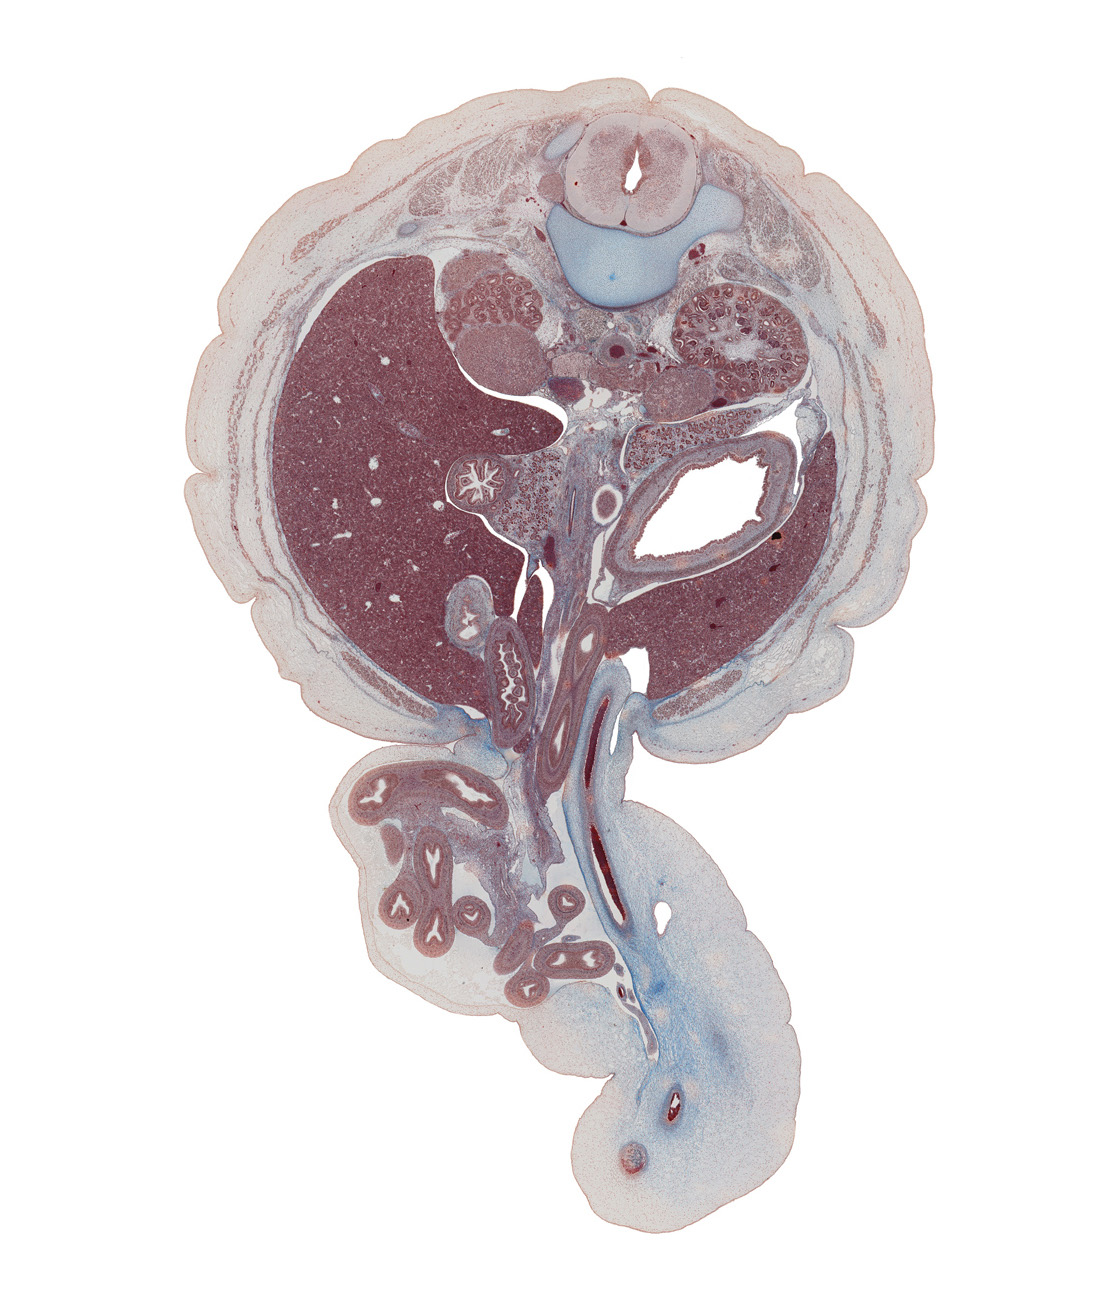 T-12 / L-1 interganglion region, allantoic vesicle(s), aorta, body of dorsal pancreas, colon, descending part of duodenum, edge of ascending part of duodenum, edge of right umbilical artery, gall bladder, greater curvature of stomach, head of ventral pancreas, herniated intestines, inferior vena cava, jejunum, kidney (metanephros), left lobe of liver, left umbilical artery, lesser sac (omental bursa), midpoint of midgut (ileum), notochord, right lobe of liver, superior mesenteric artery, superior mesenteric vein, superior pole of kidney (metanephros), sympathetic trunk, umbilical coelom, umbilical cord, umbilical vein, umbilical vesicle stalk